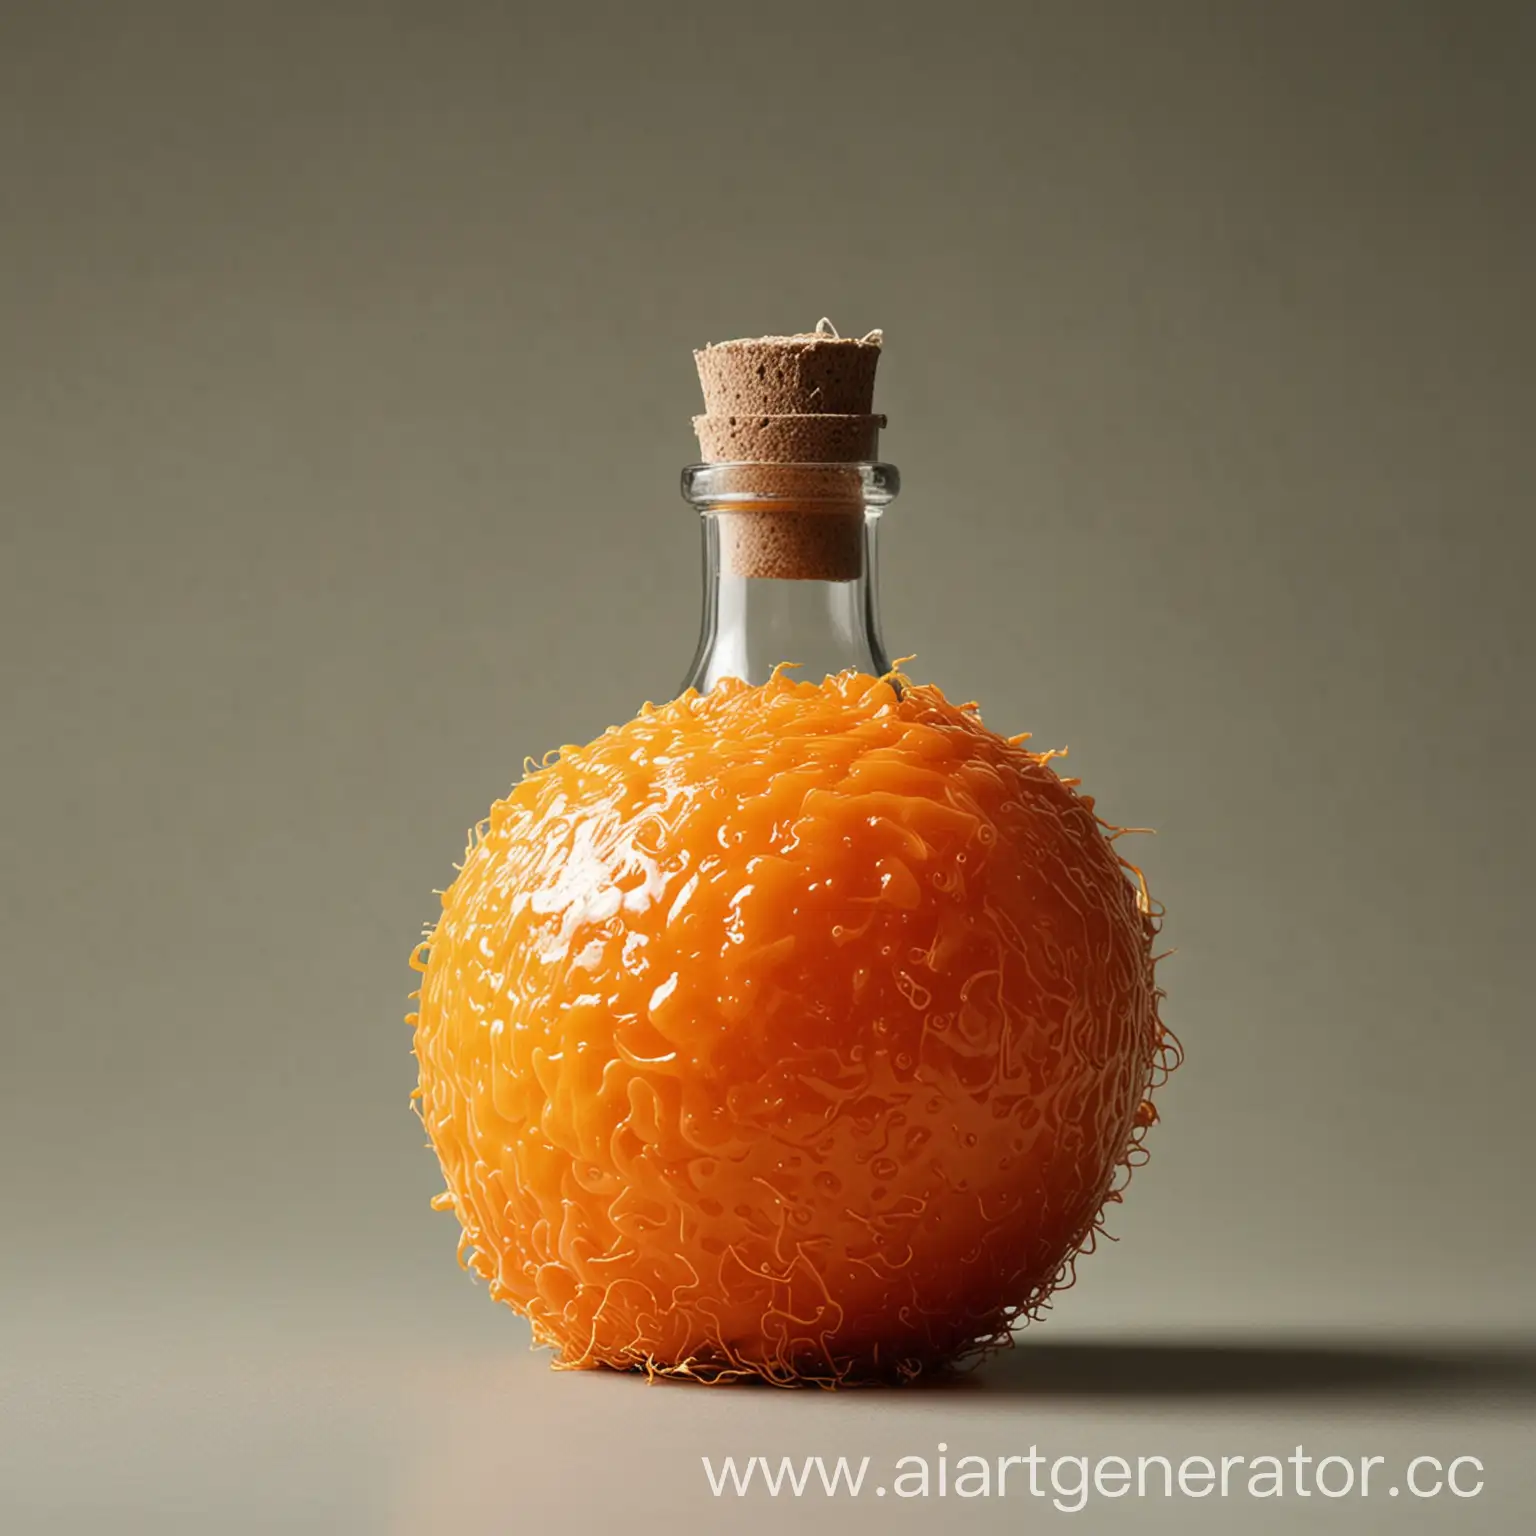 Mandarin-Orange-in-Hairy-Bottle-on-Reflective-Surface